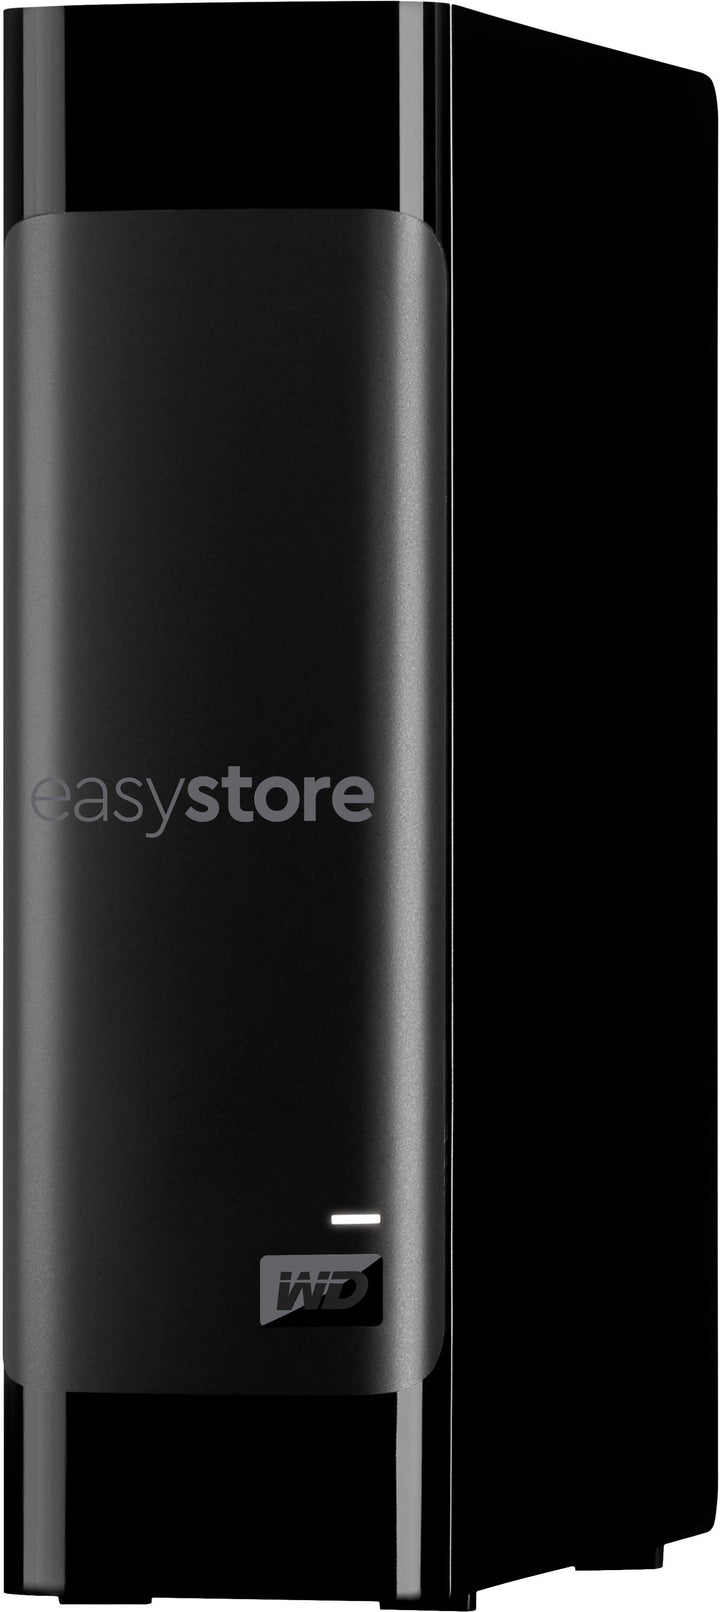 WD - easystore 22TB External USB 3.0 Hard Drive - Black_3